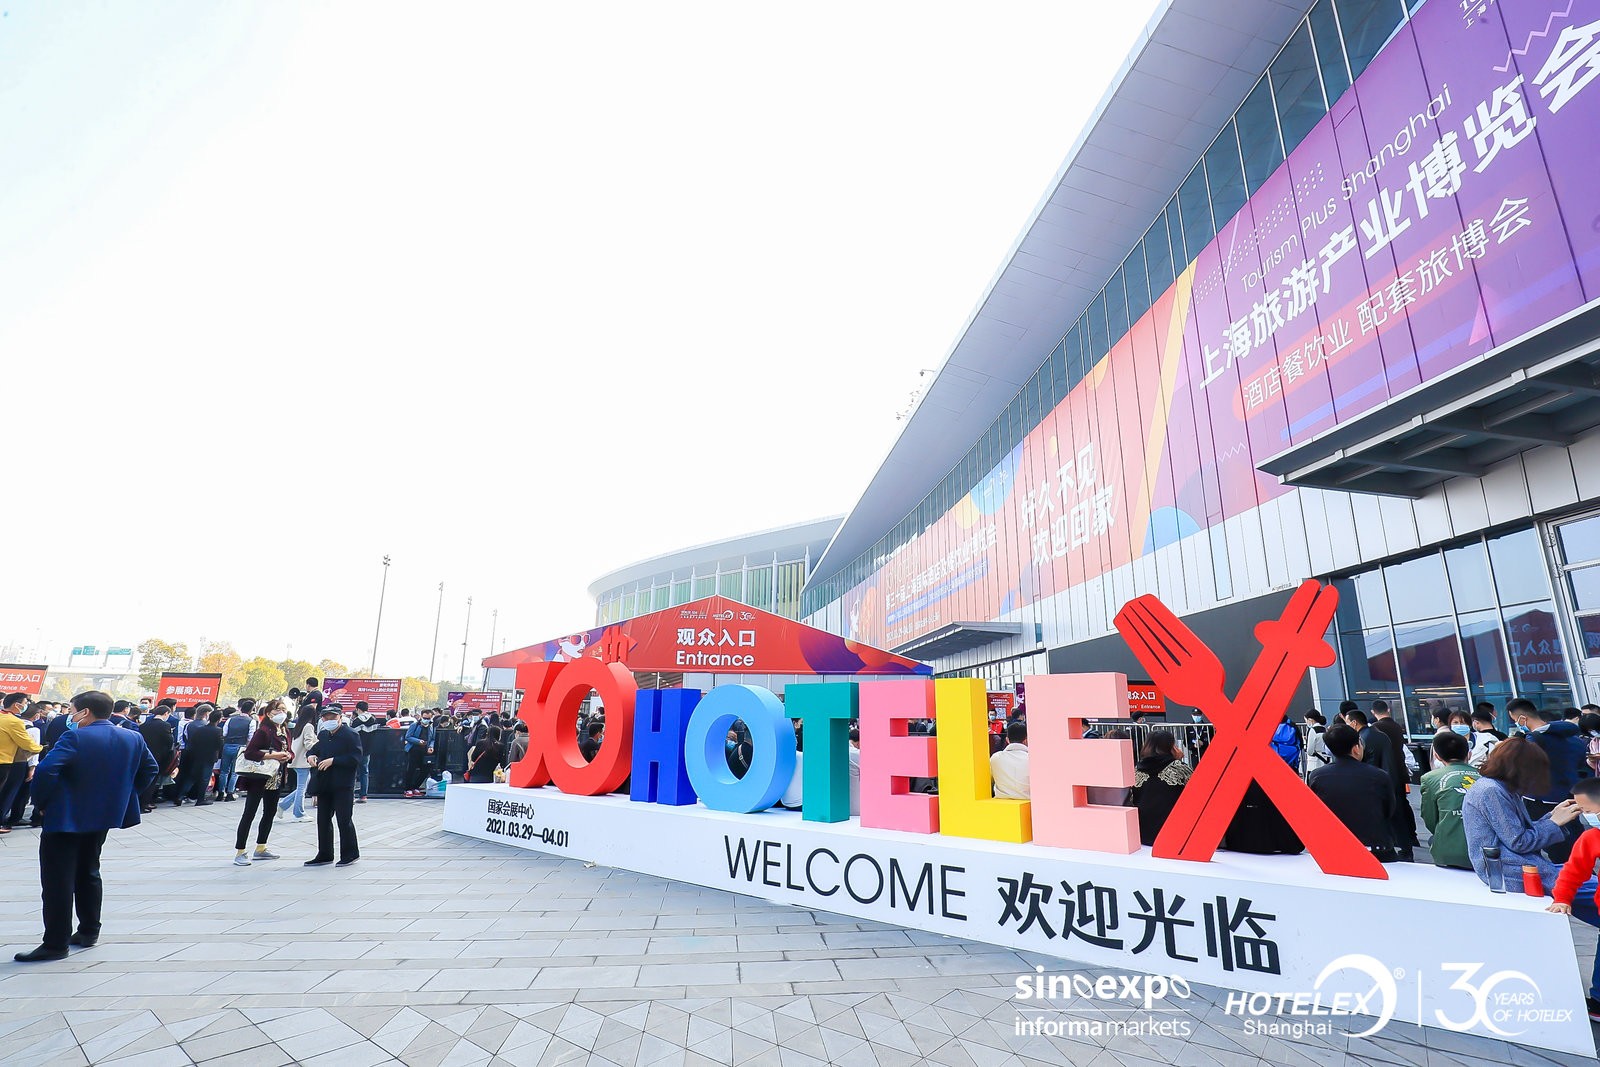 HOTELEX Shanghai: Connecting Global HoReCa Like Never Before